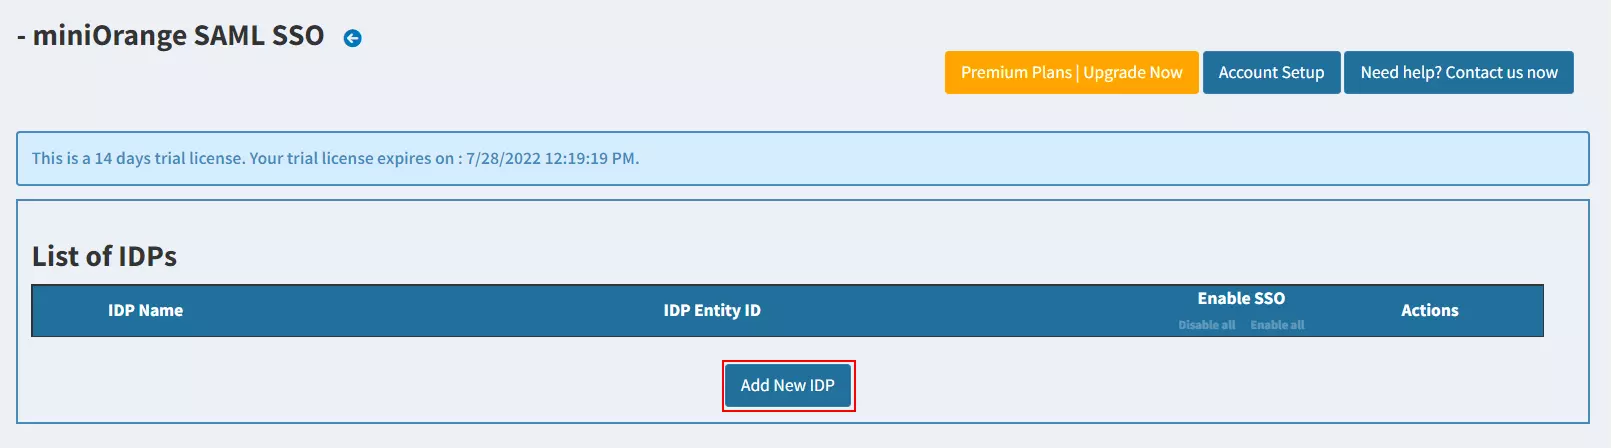 nopCommerce Single Sign-On (SSO) using Keycloak as IDP - Add new IDP